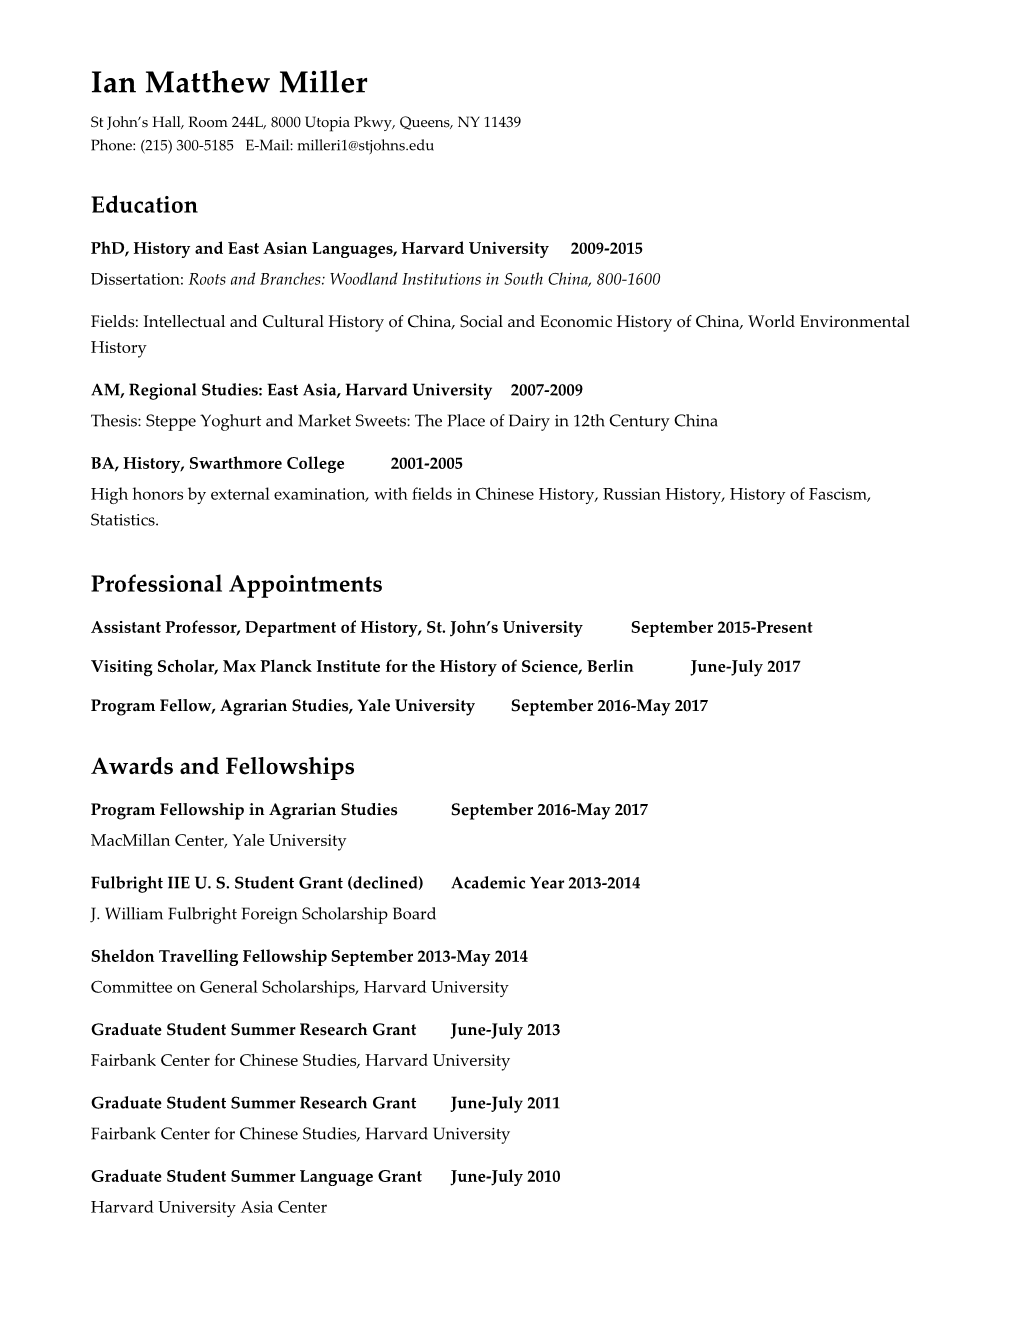 Phd, History and East Asian Languages, Harvard University2009-2015